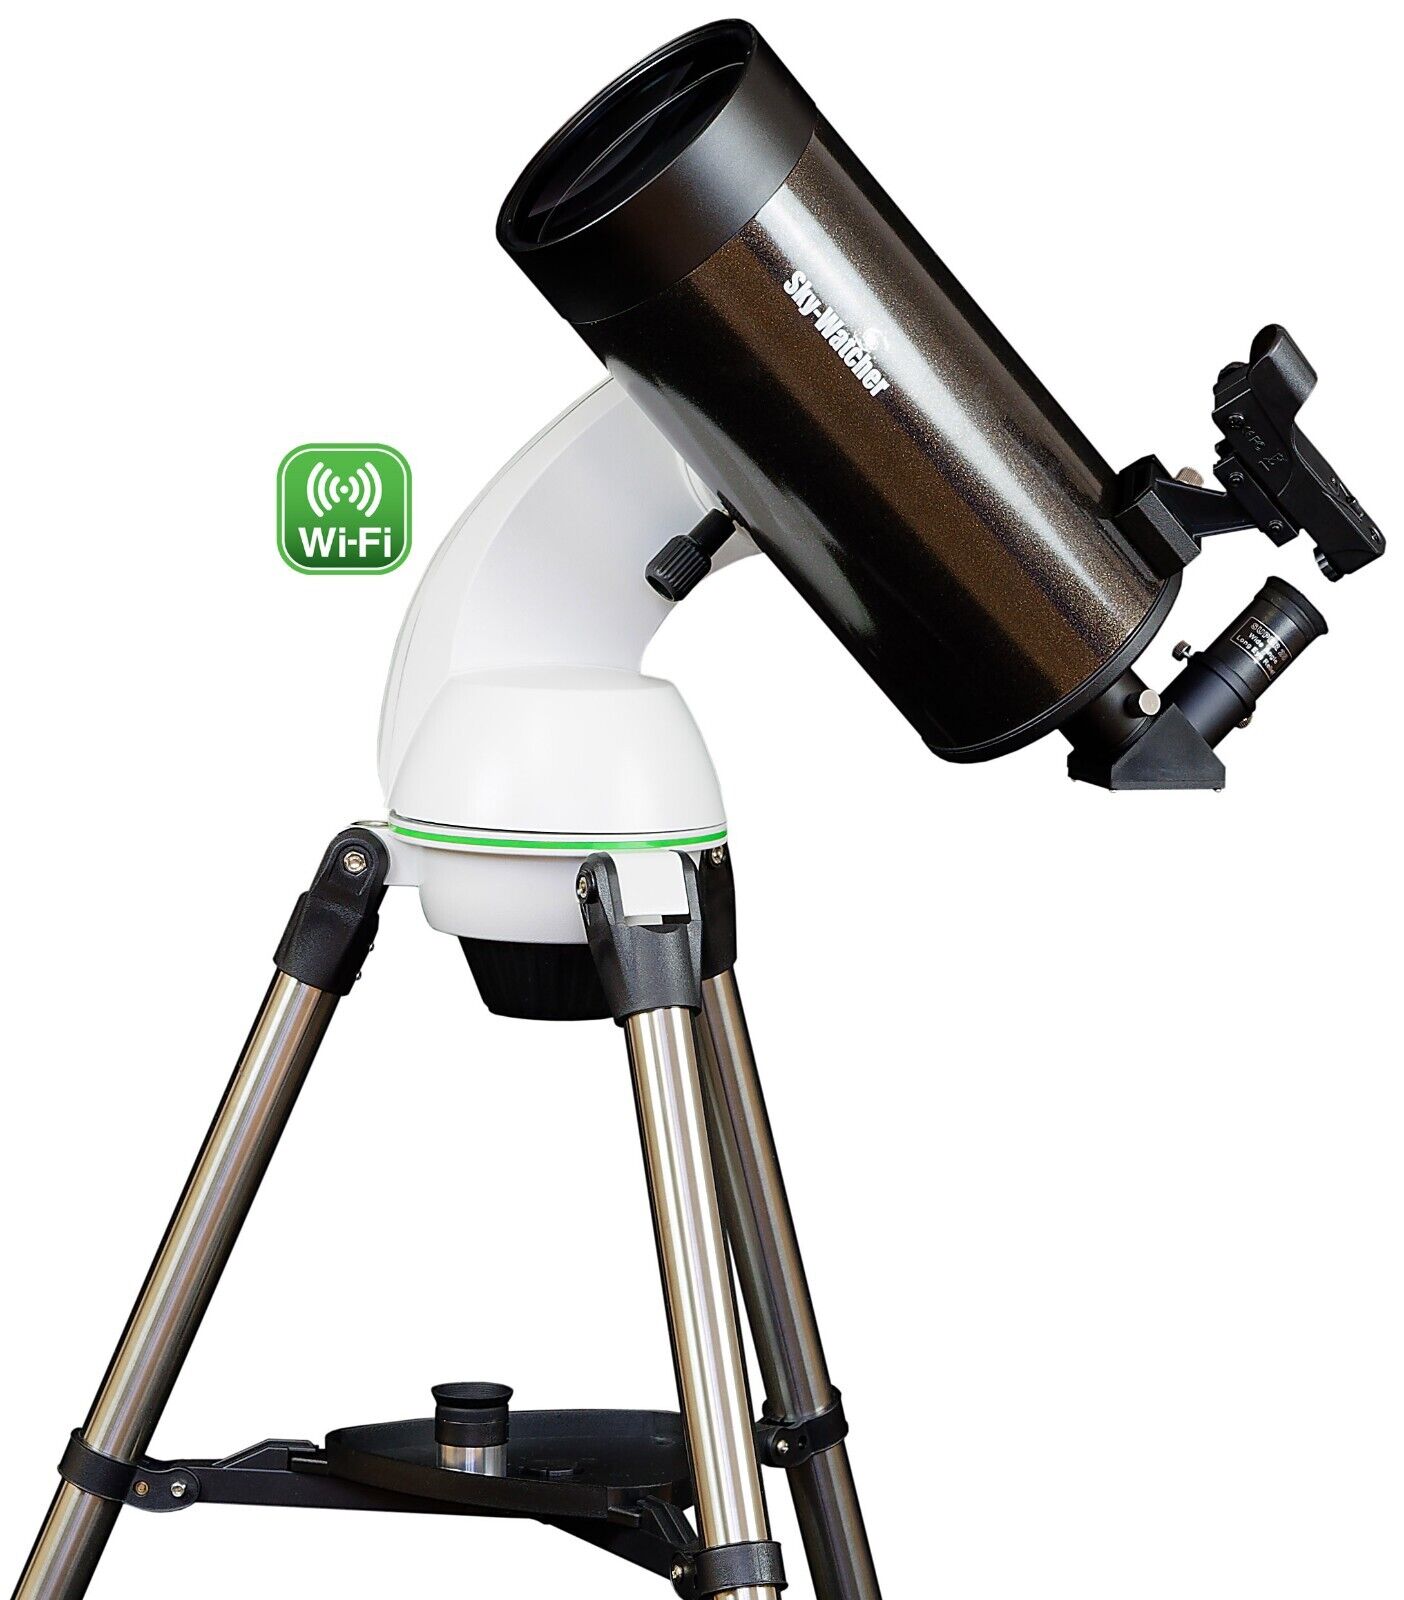 Product Image of Sky Watcher Skymax -127 AZ-Go2 Wi-Fi Maksutov-Cassegrain Telescope - 10195